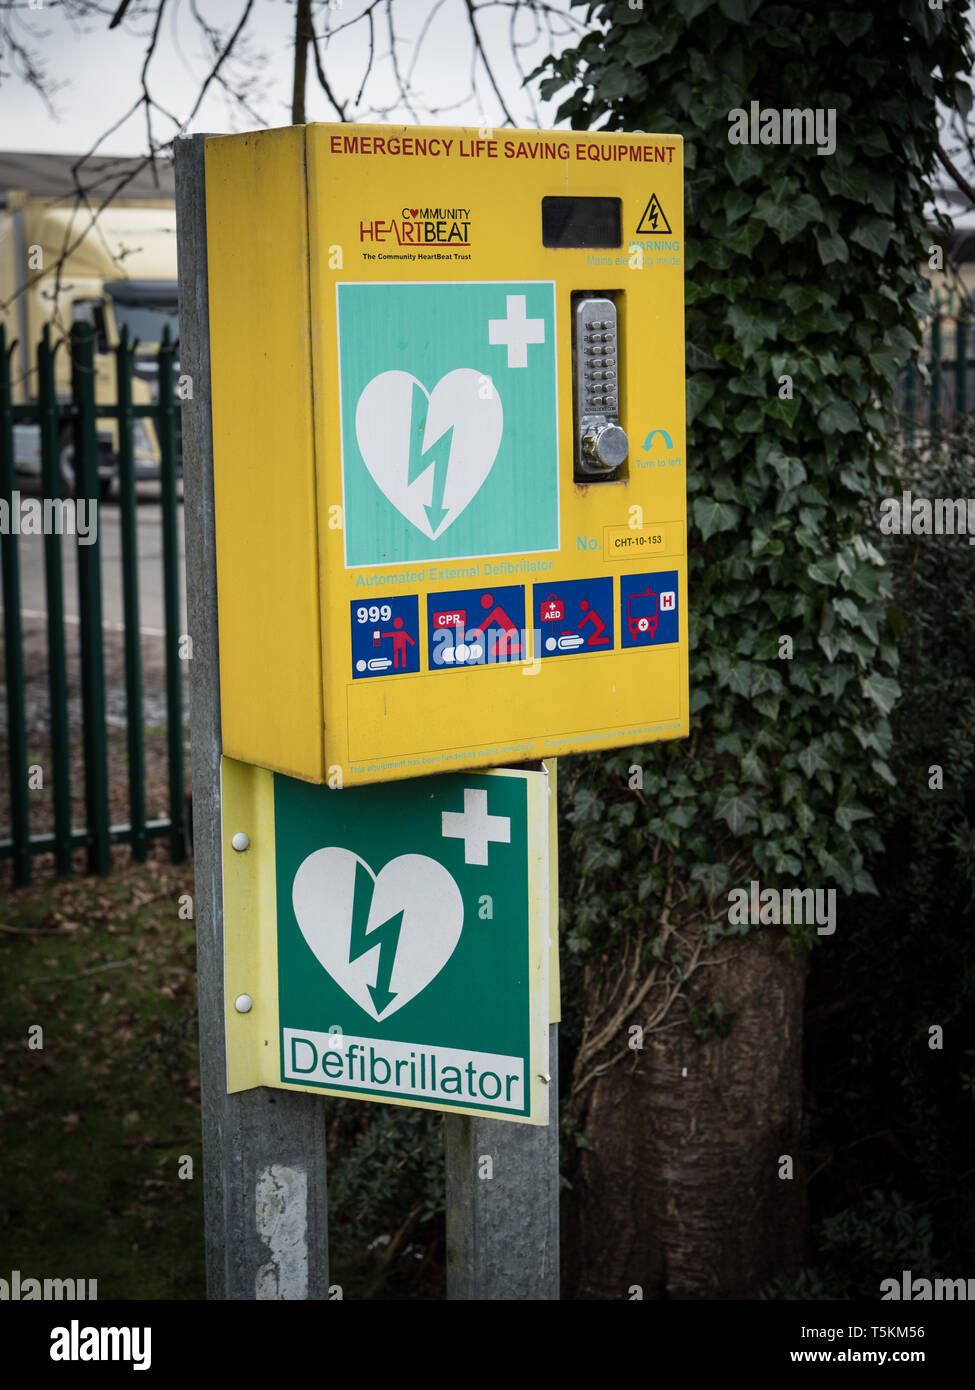 Emergency portable defibrillation aparatus Stock Photo